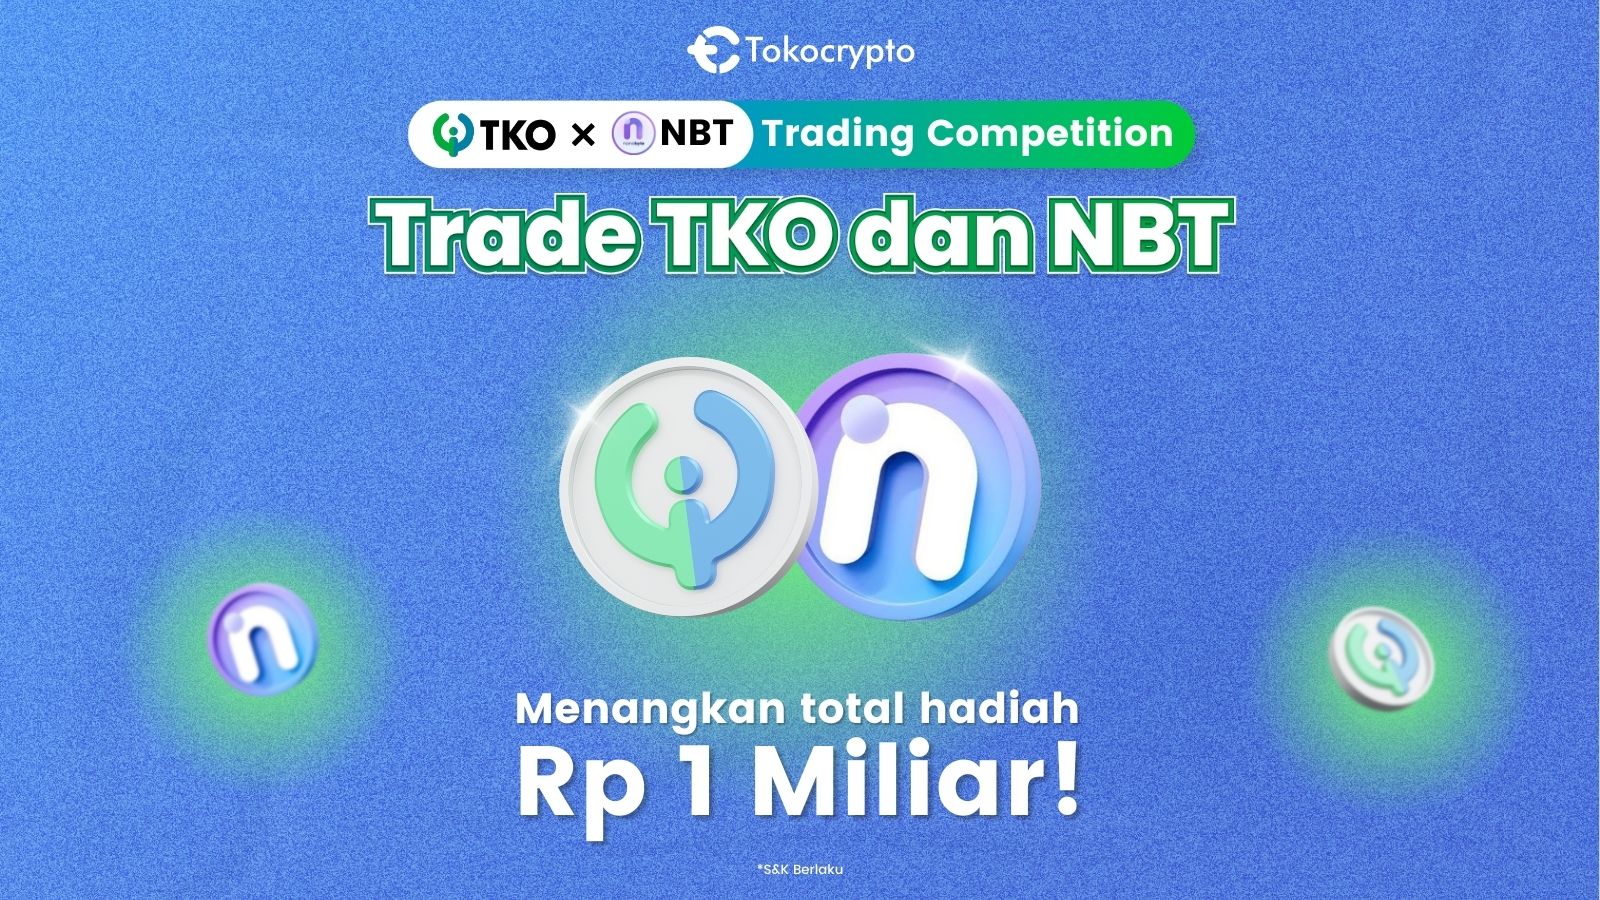 Ilustrasi trading competition TKO x NBT.